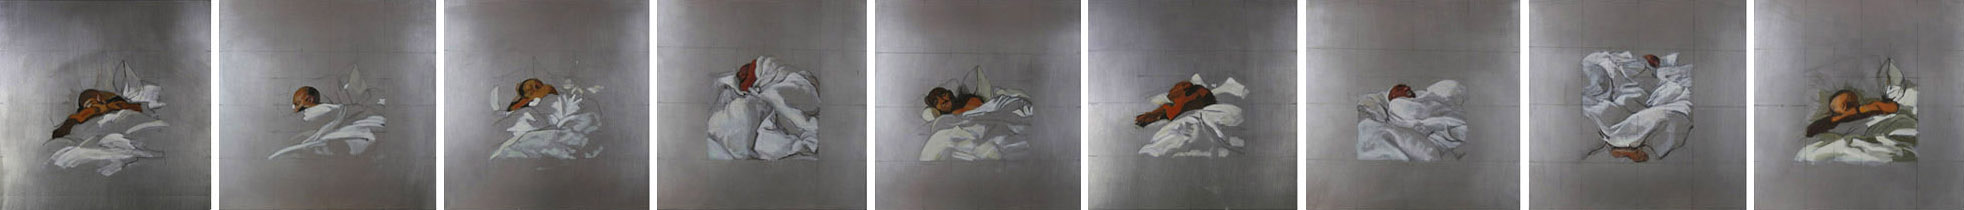 Film stills from artist Emilia Izquierdo's experimental film Sleep, 2007.